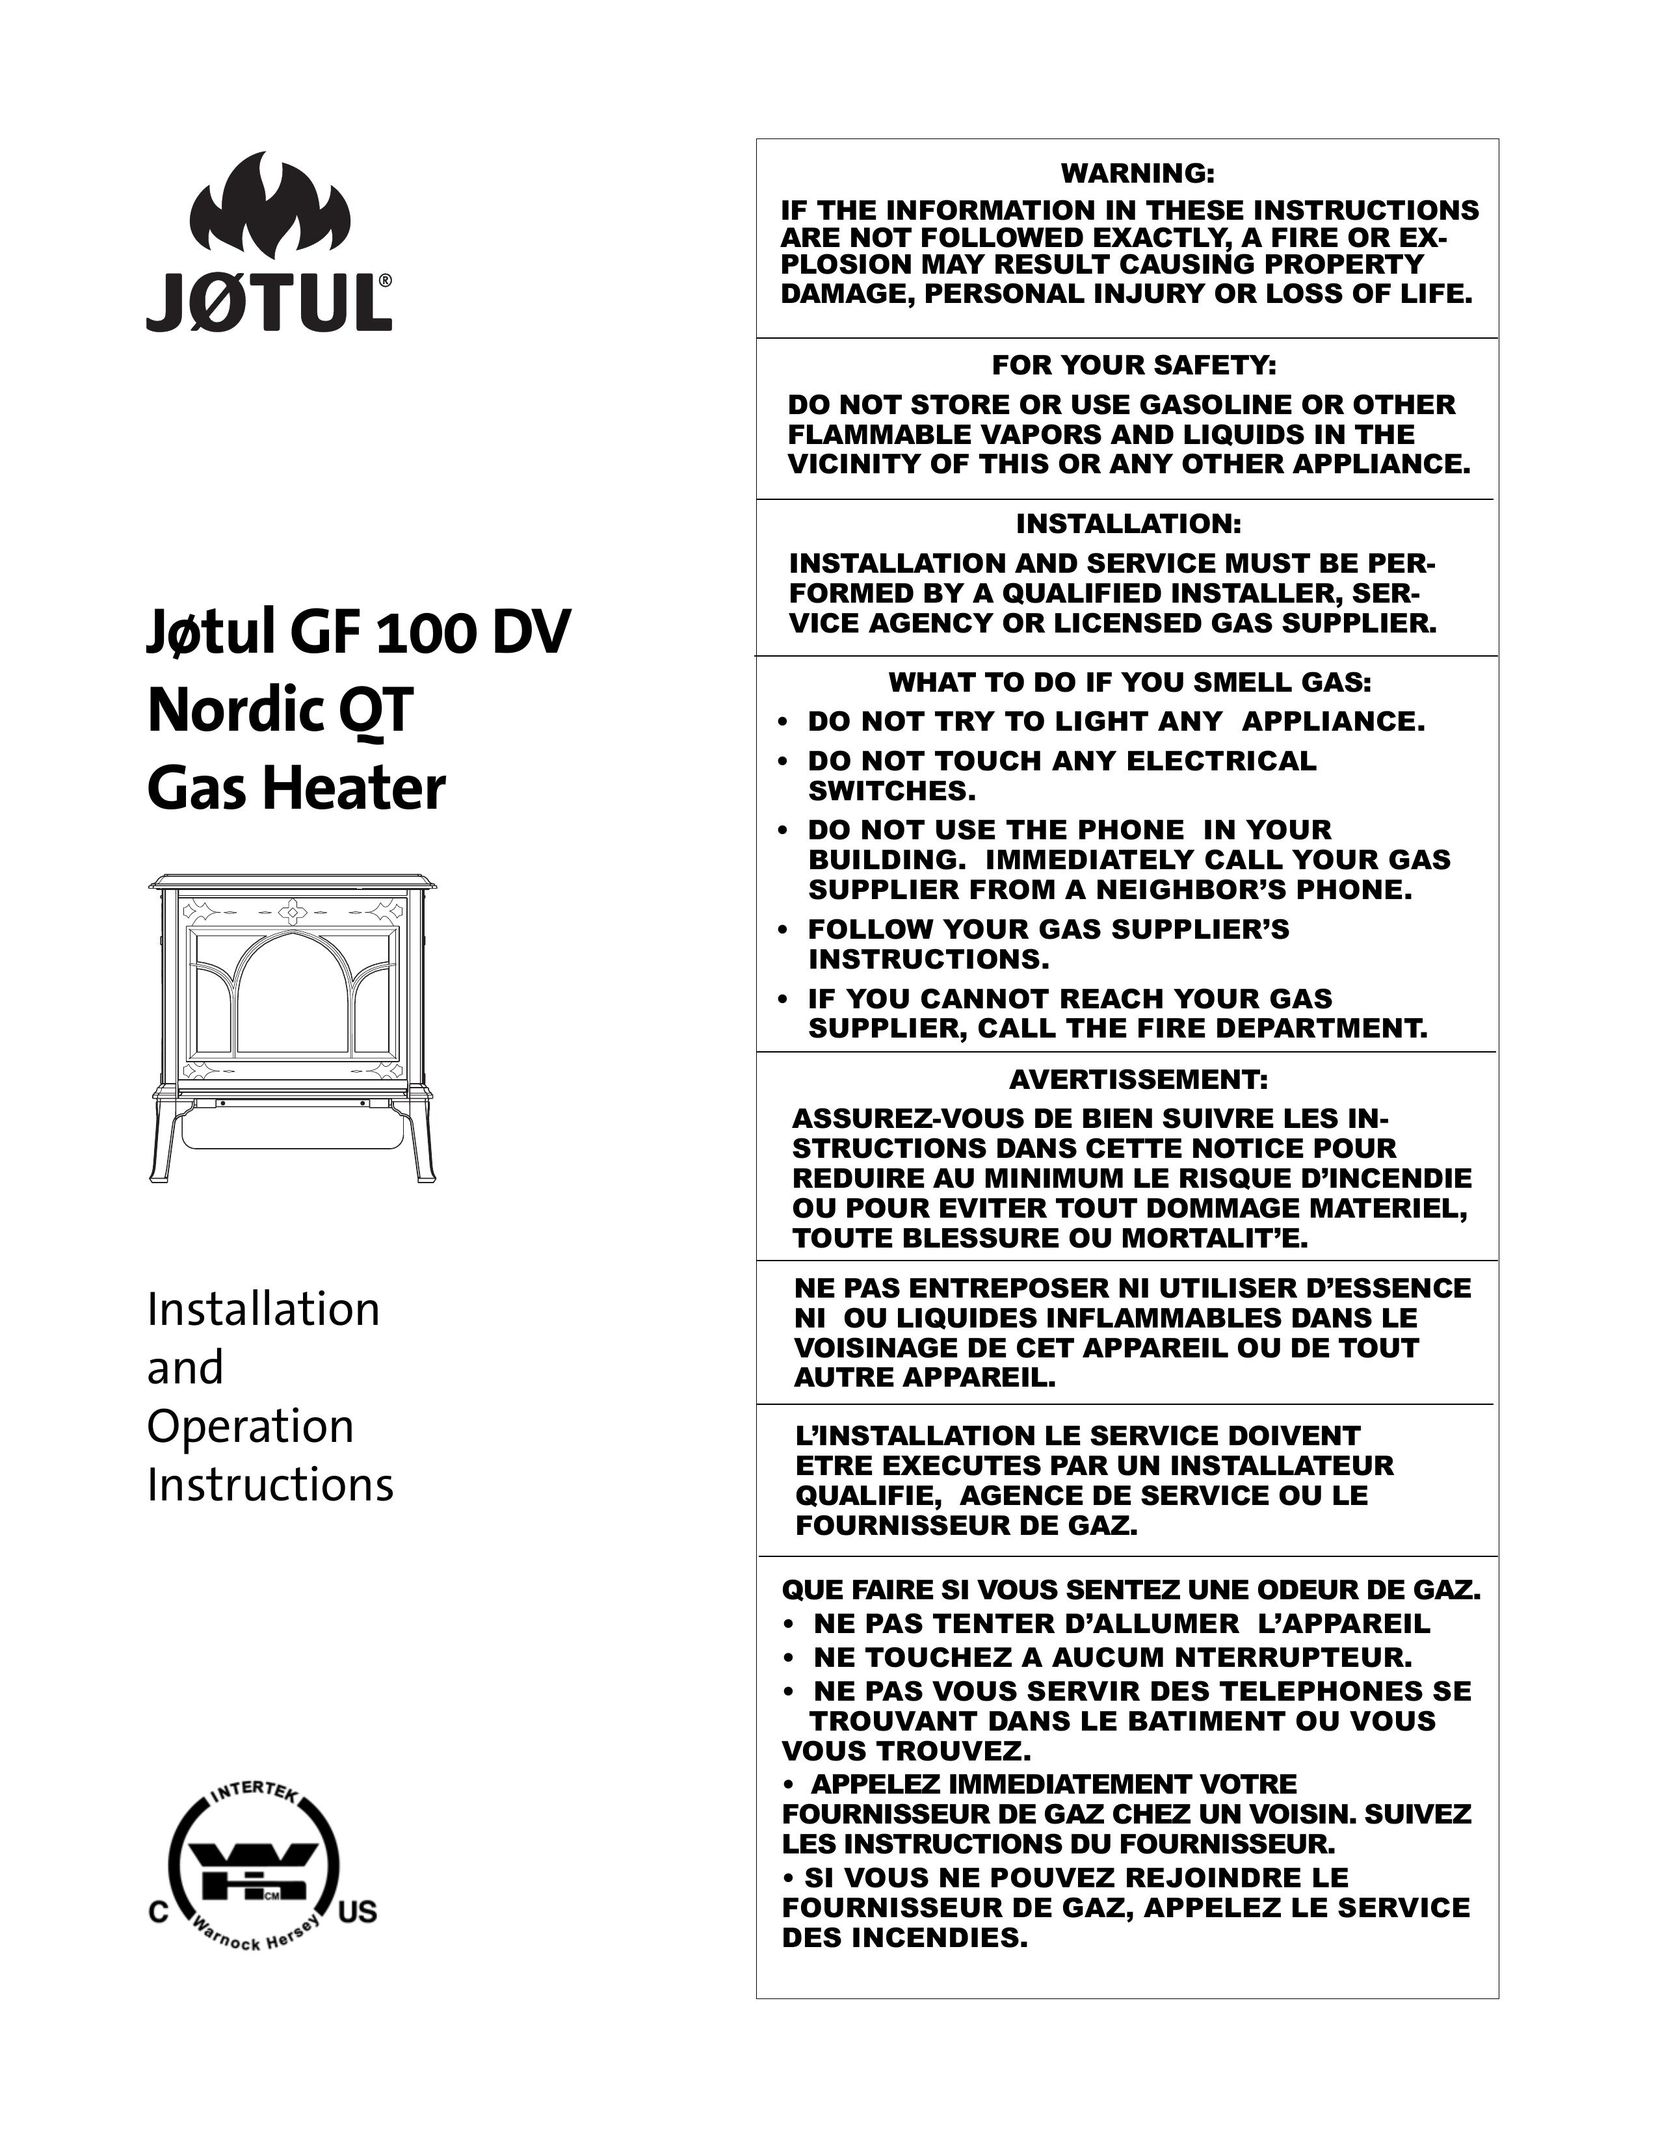 Jotul GF100 DV Electric Heater User Manual